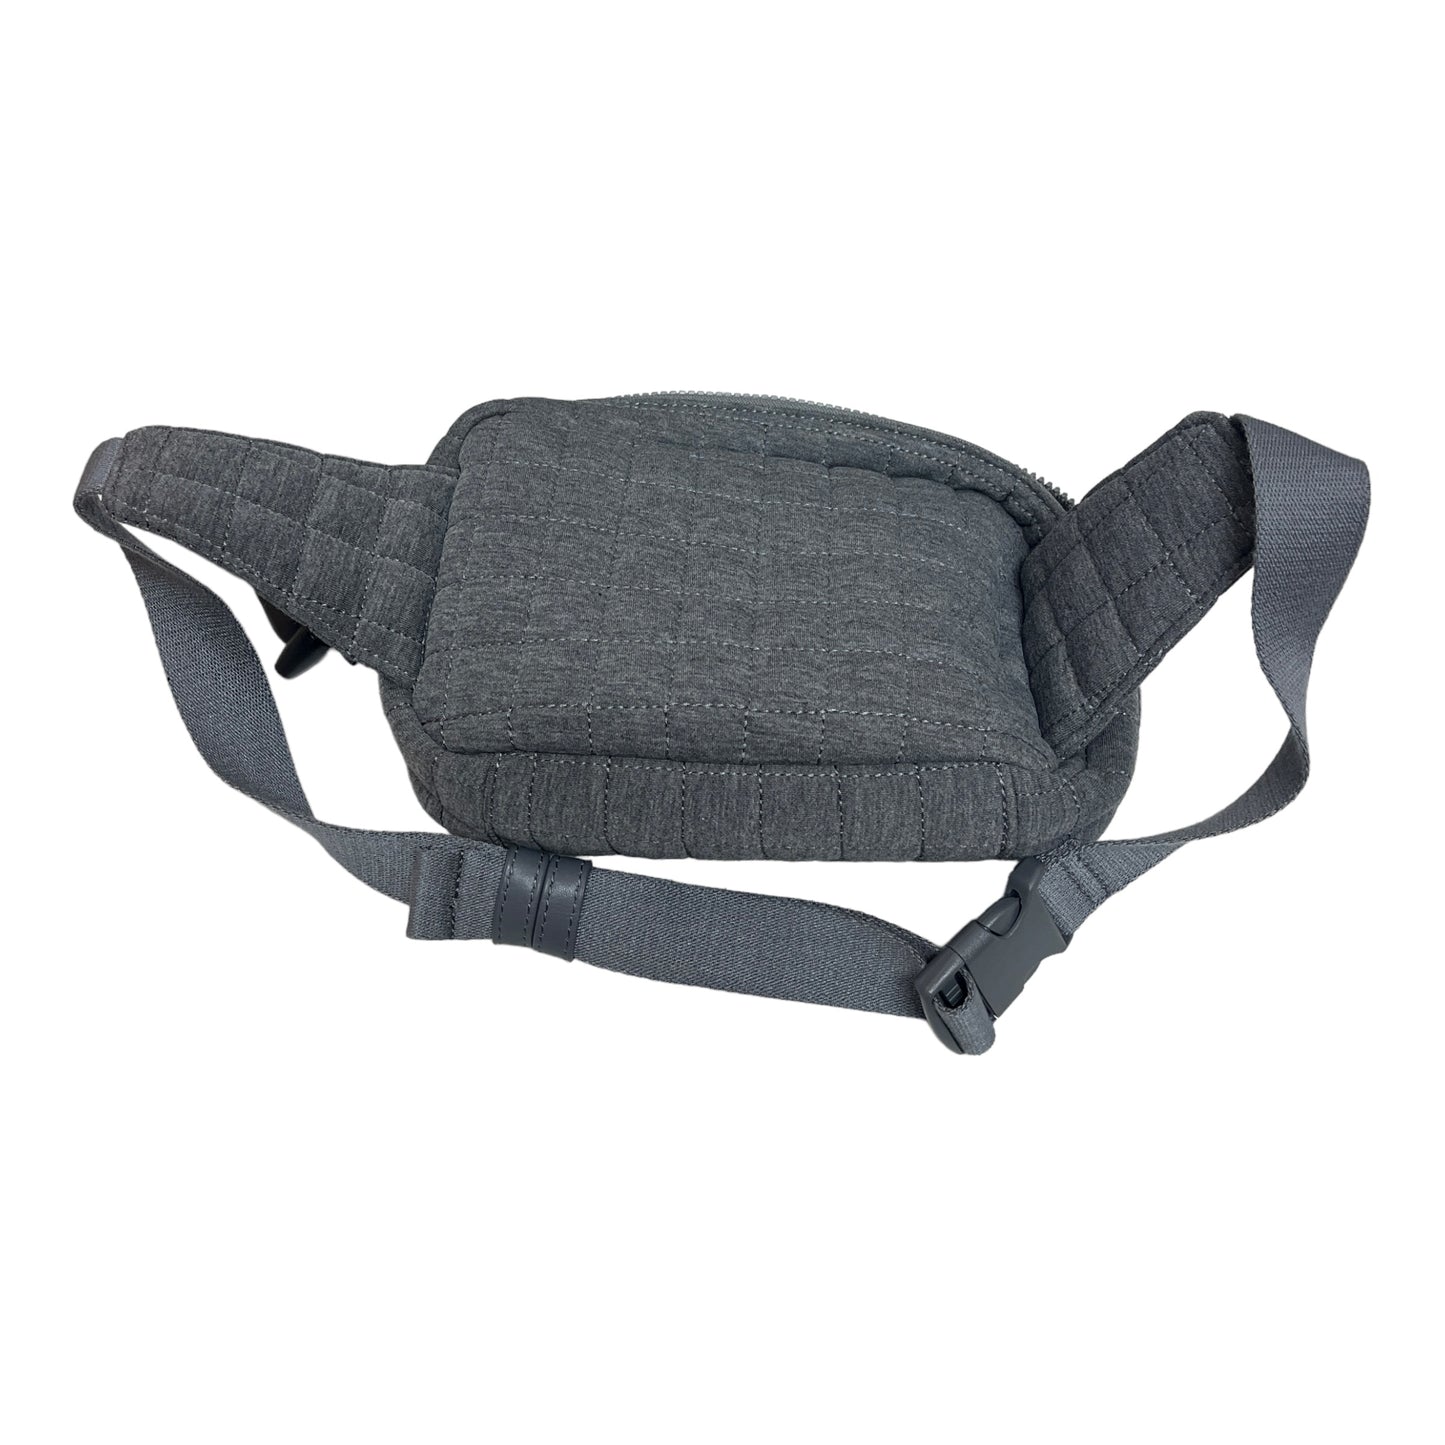 Belt Bag By Talbots  Size: Medium